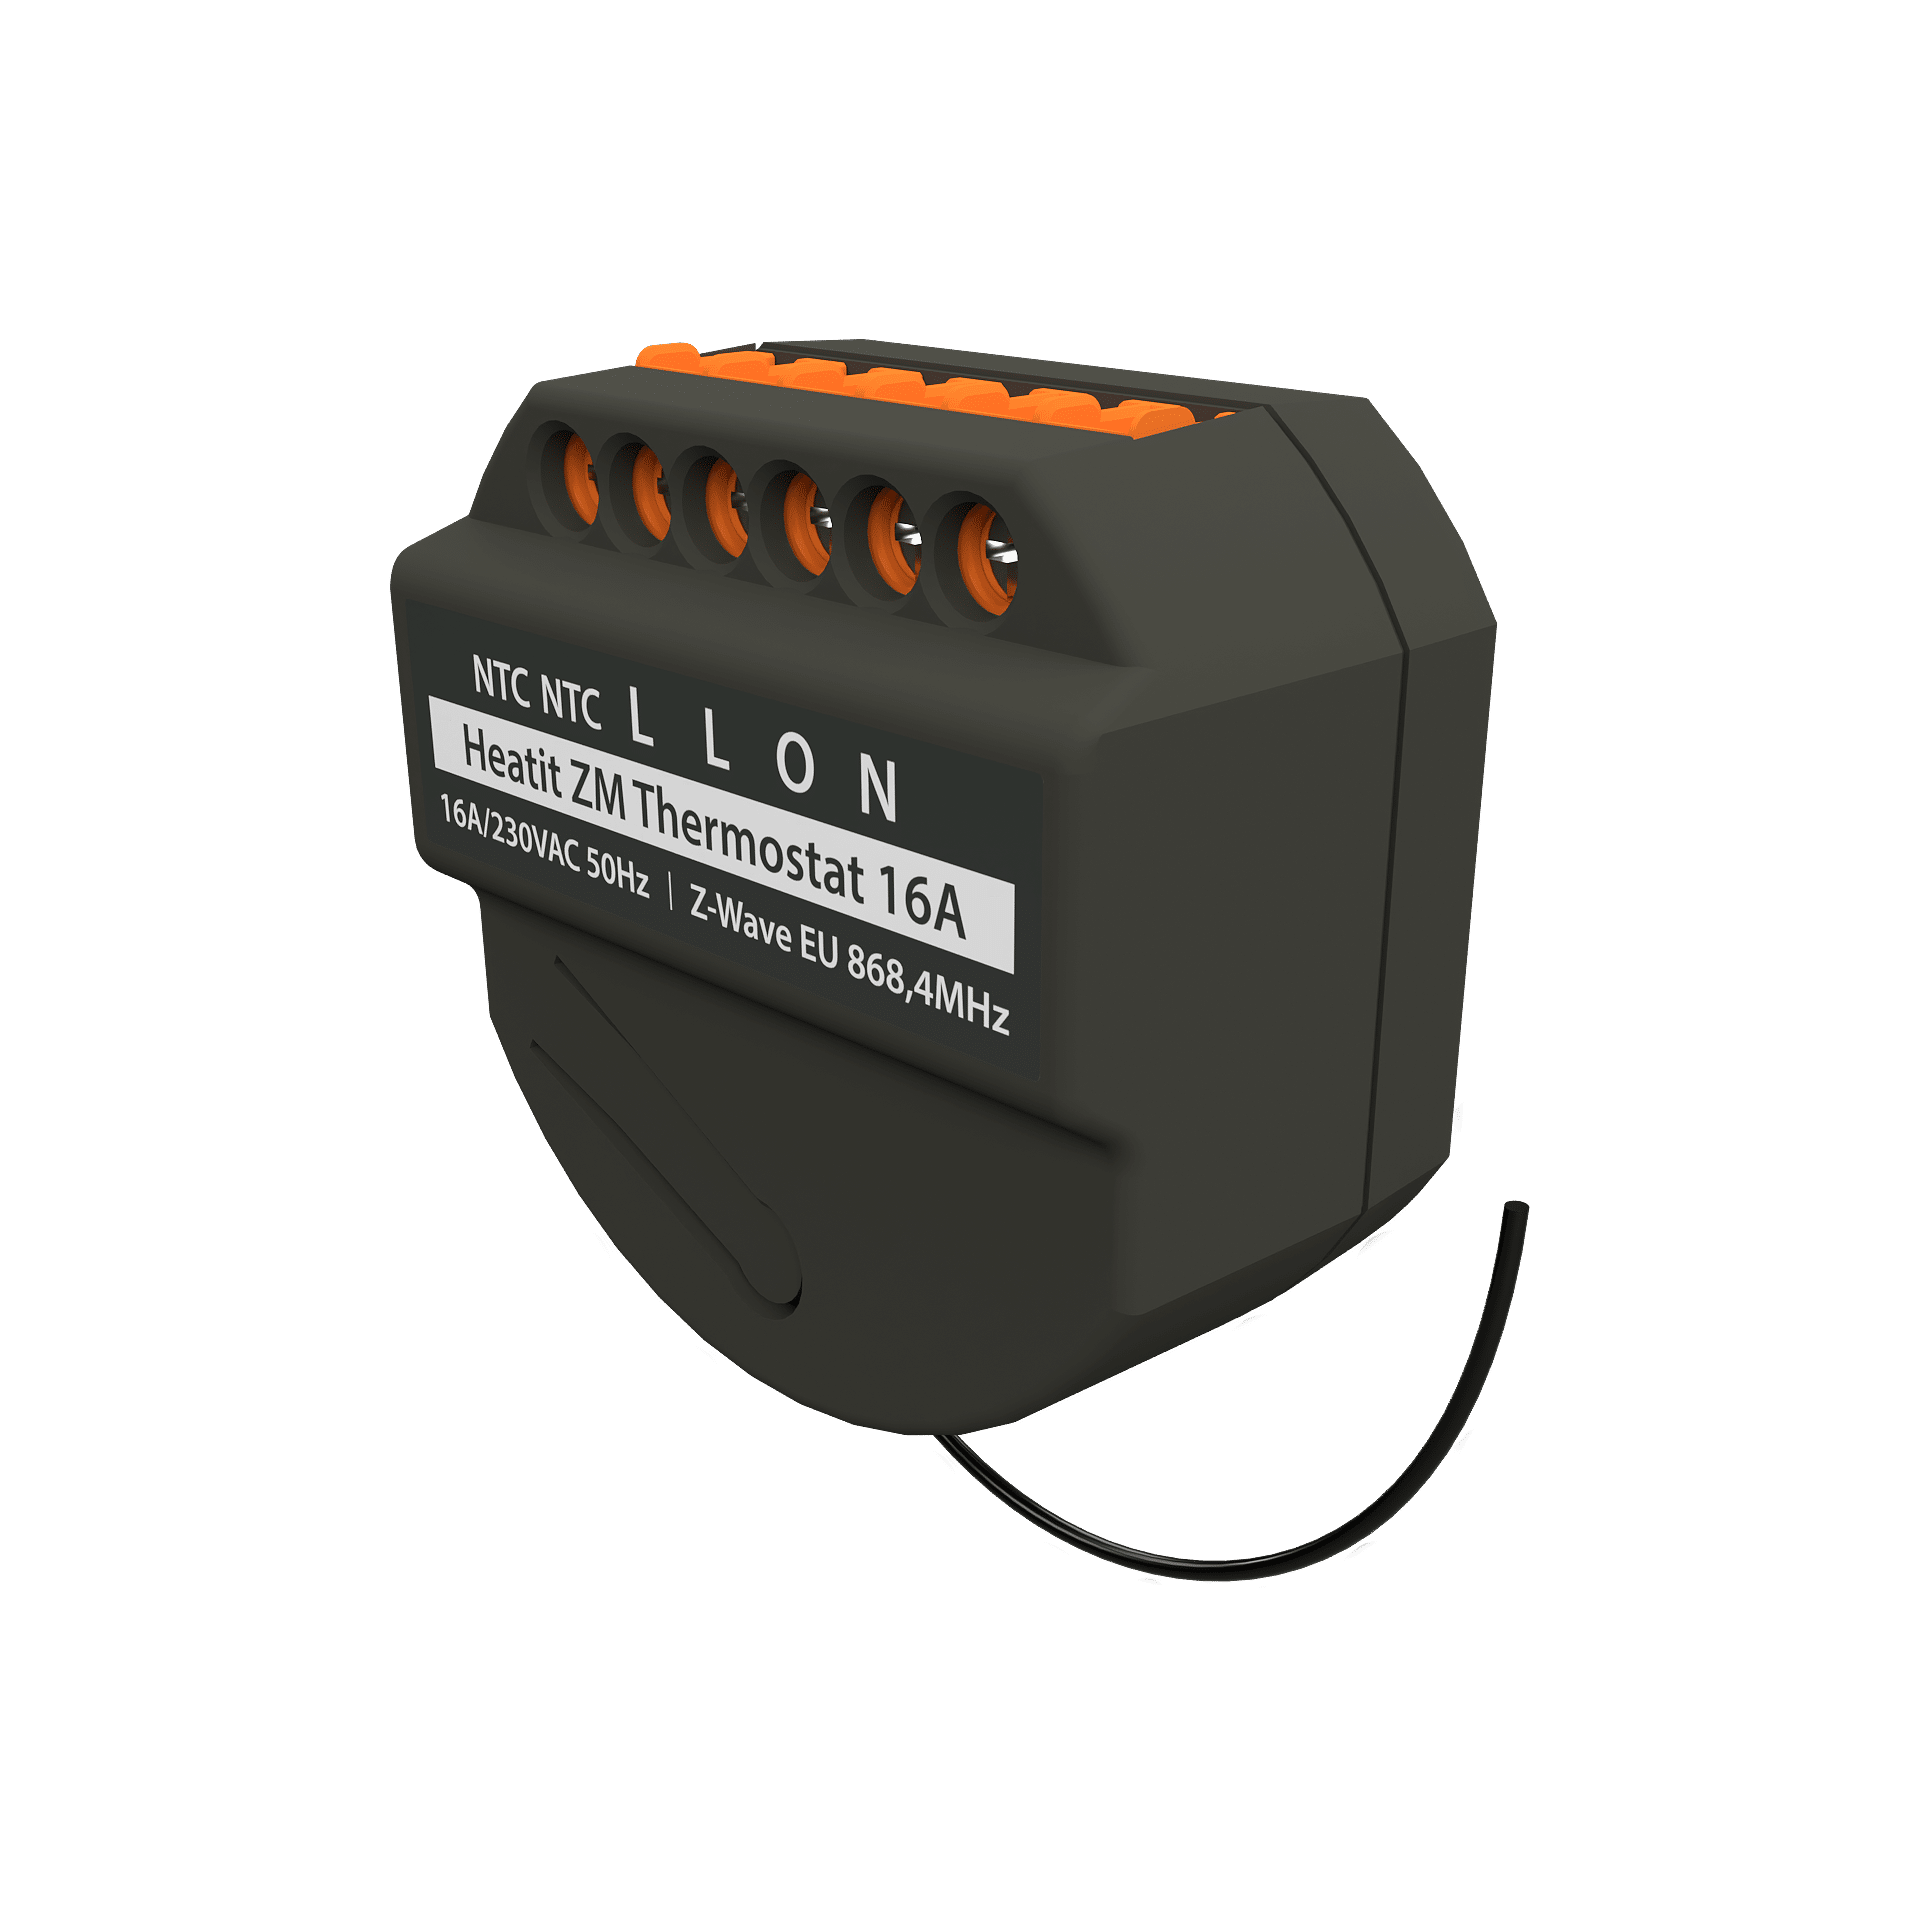 Heatit ZM Thermostat 16A